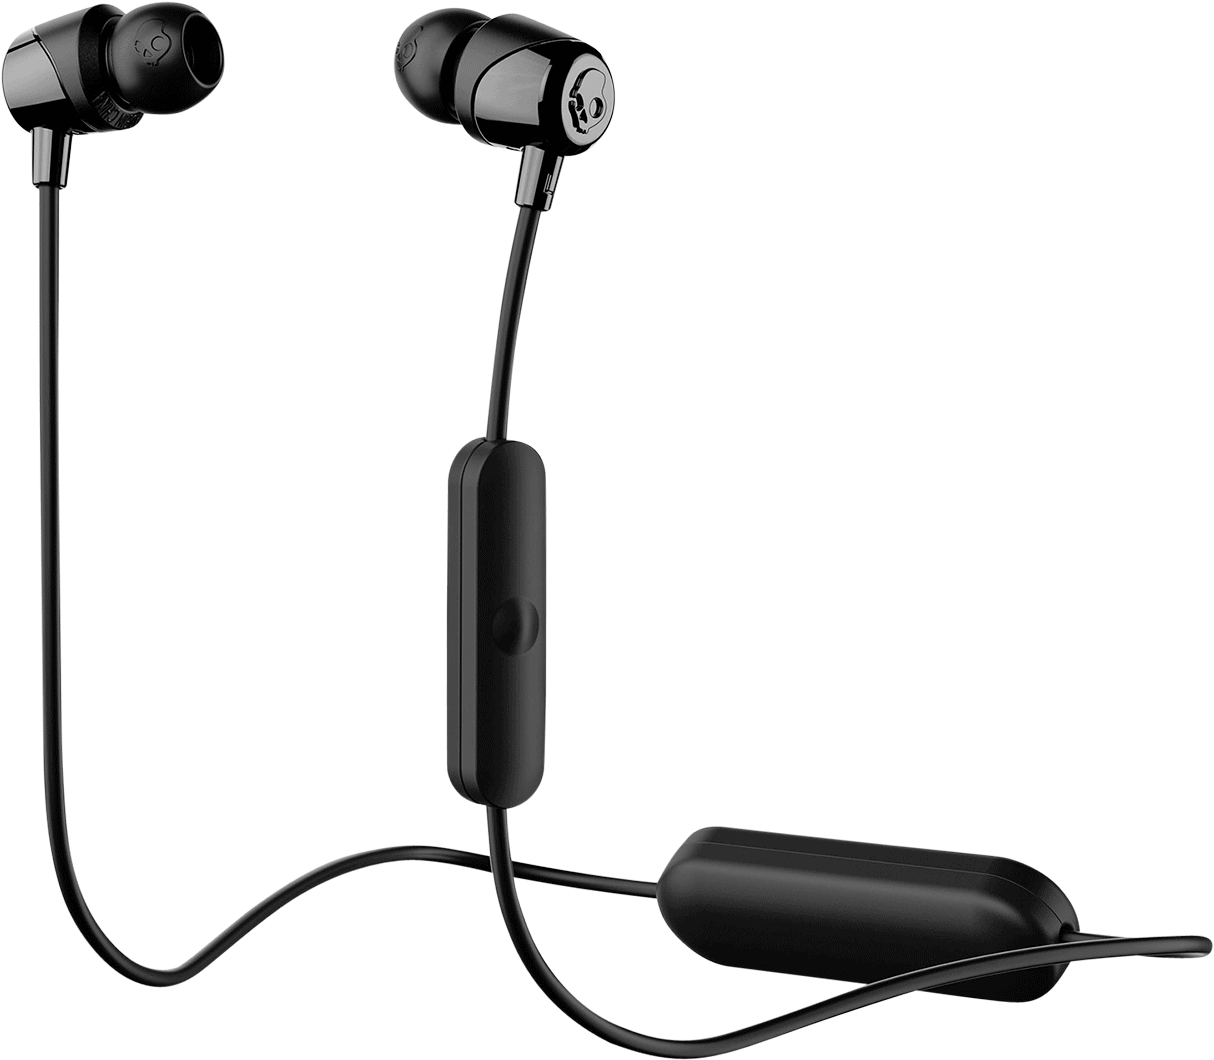 In-Ear Headphones PNG HD Quality